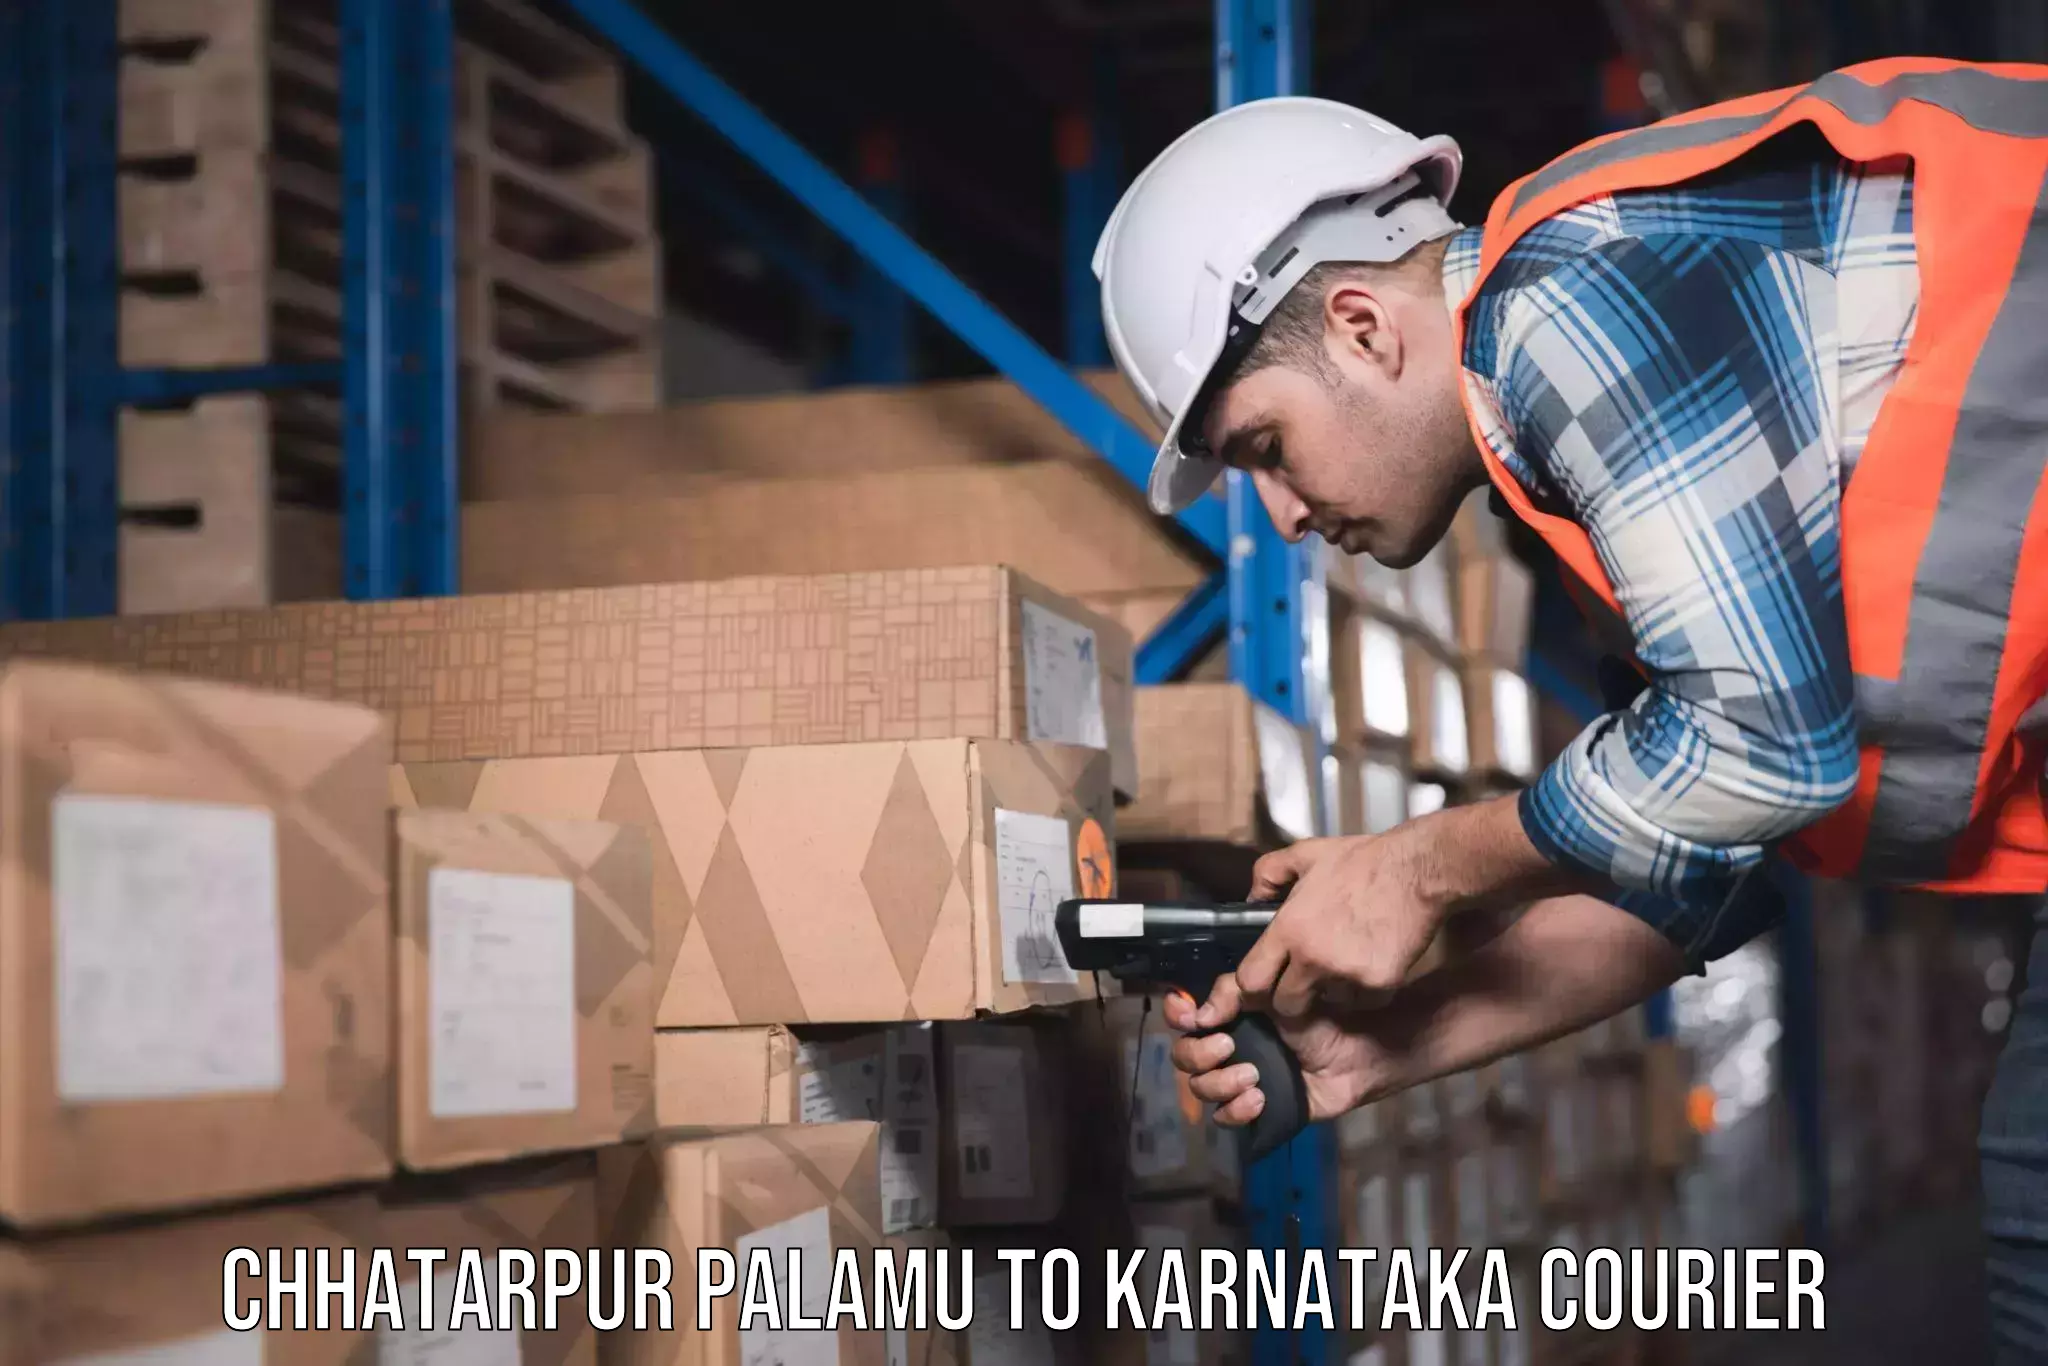 Furniture delivery service Chhatarpur Palamu to Karnataka